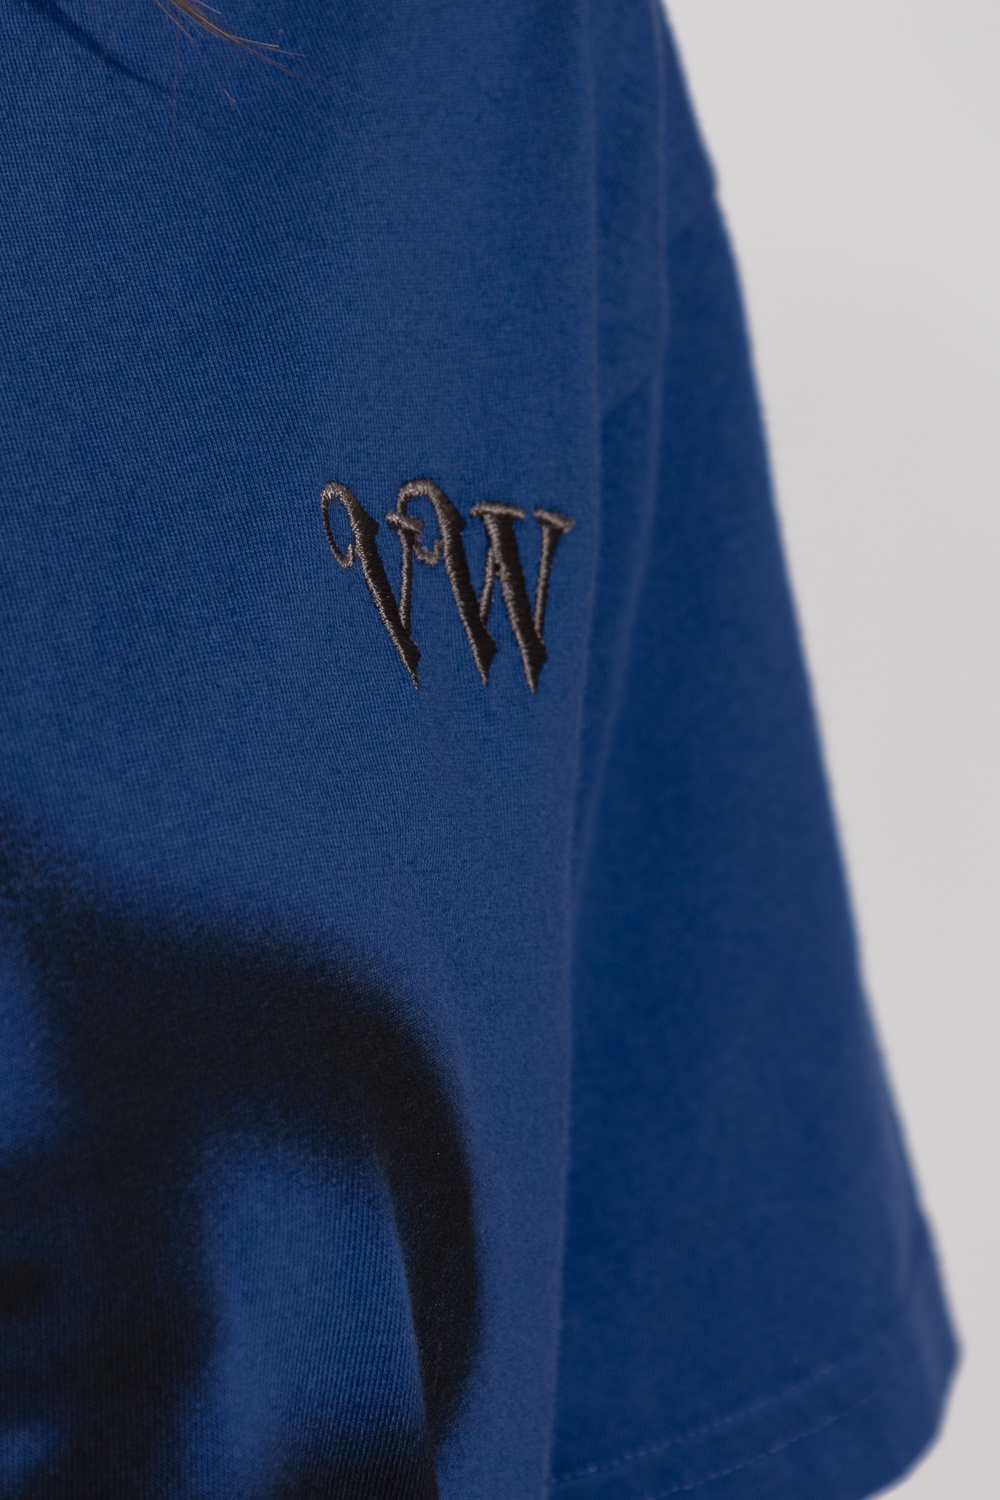 Vivienne Westwood Grey Striped Short Sleeve Polo Shirt